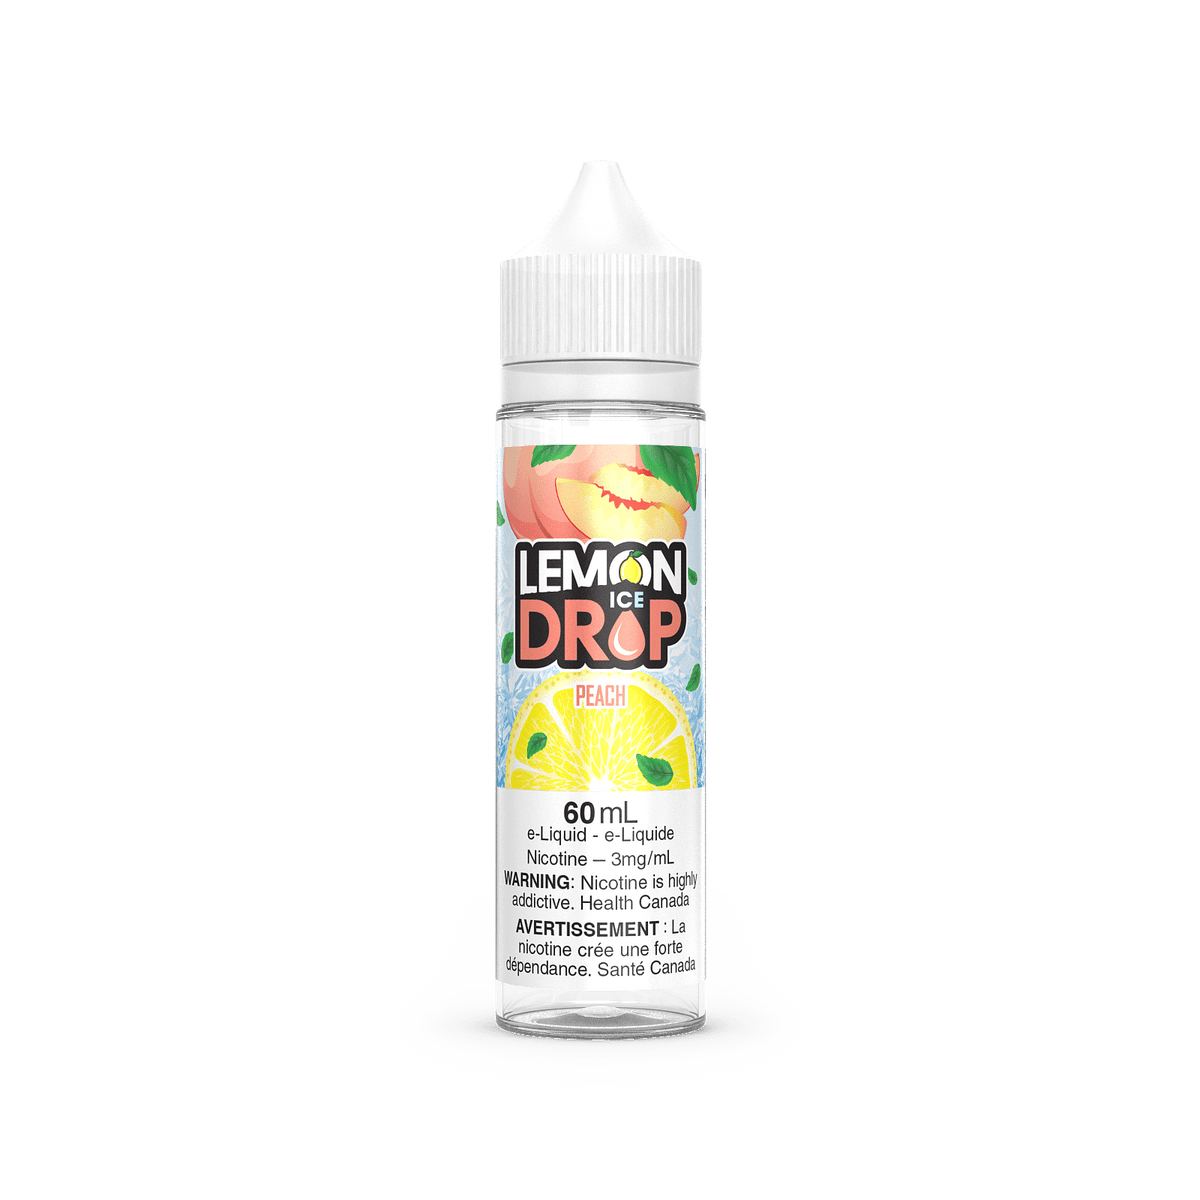 Lemon Drop Ice - Peach available on Canada online vape shop